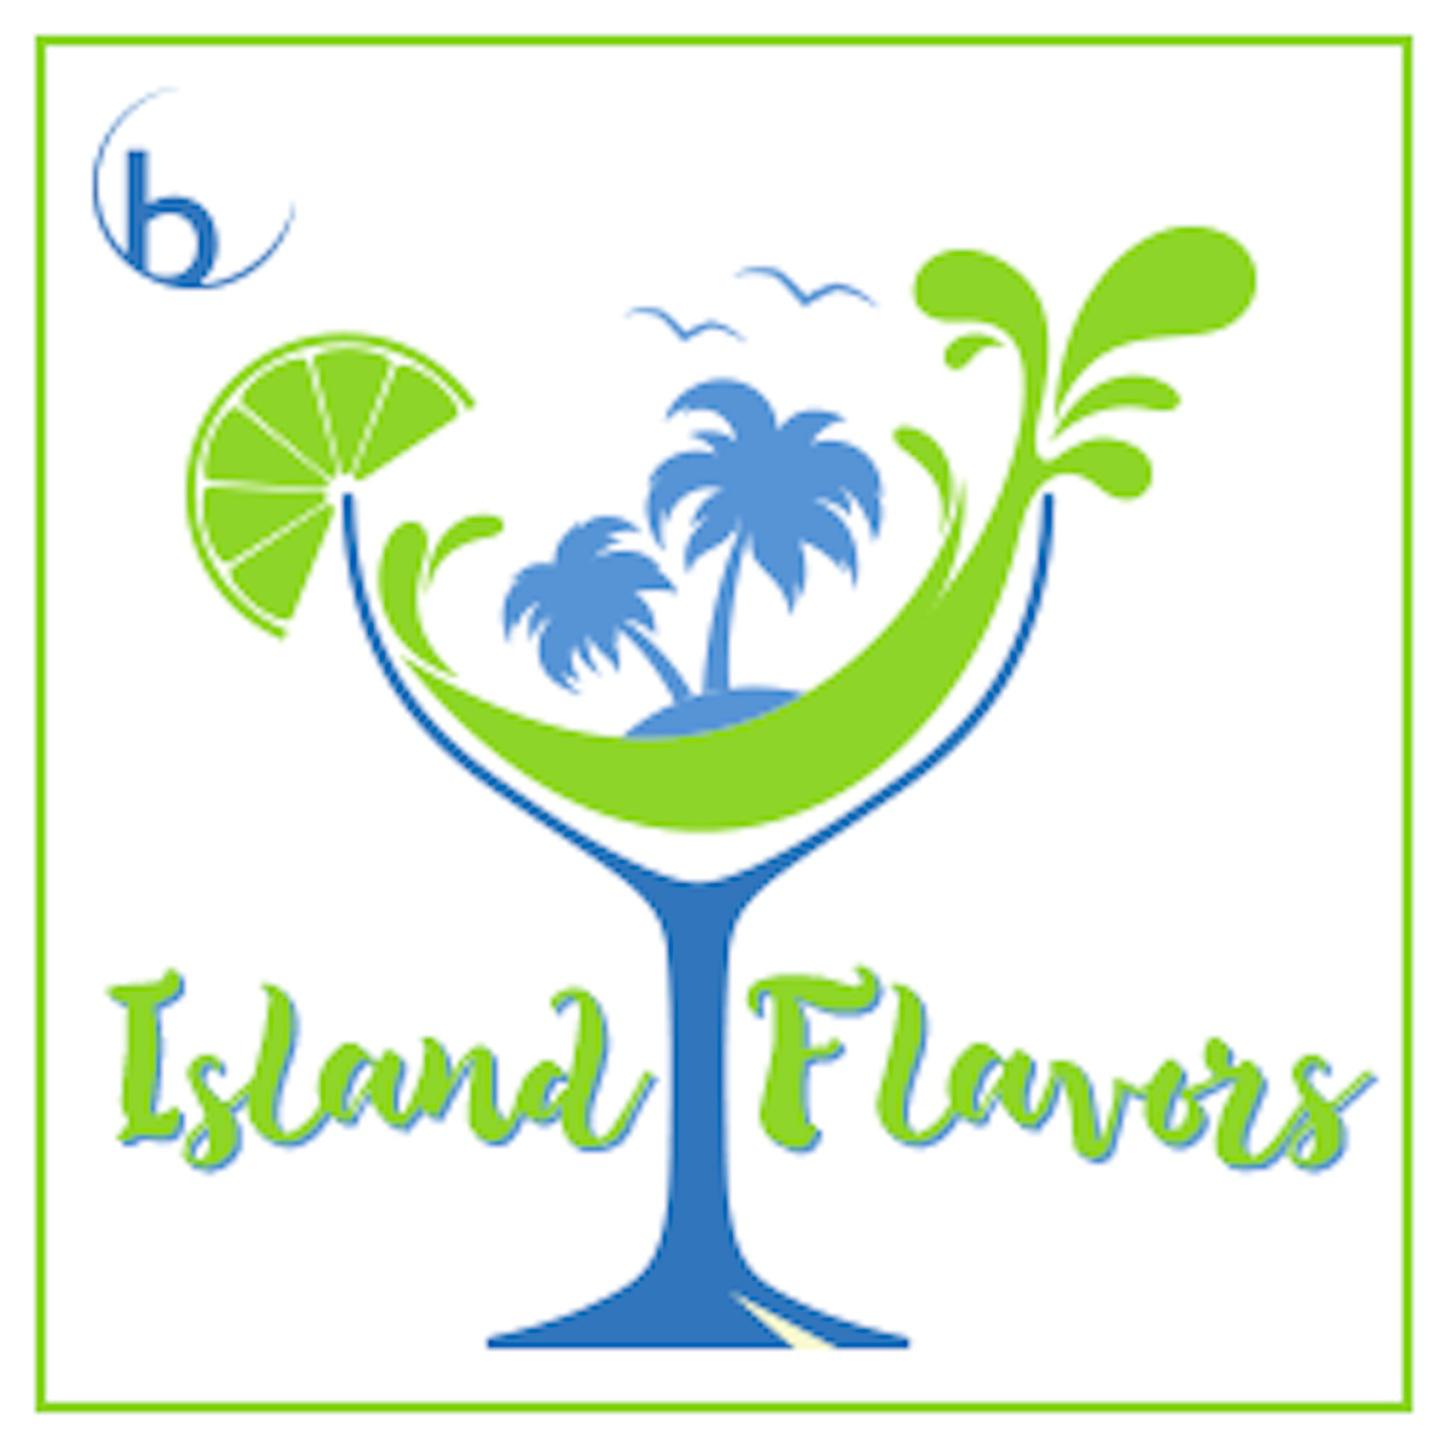 Island Flavors